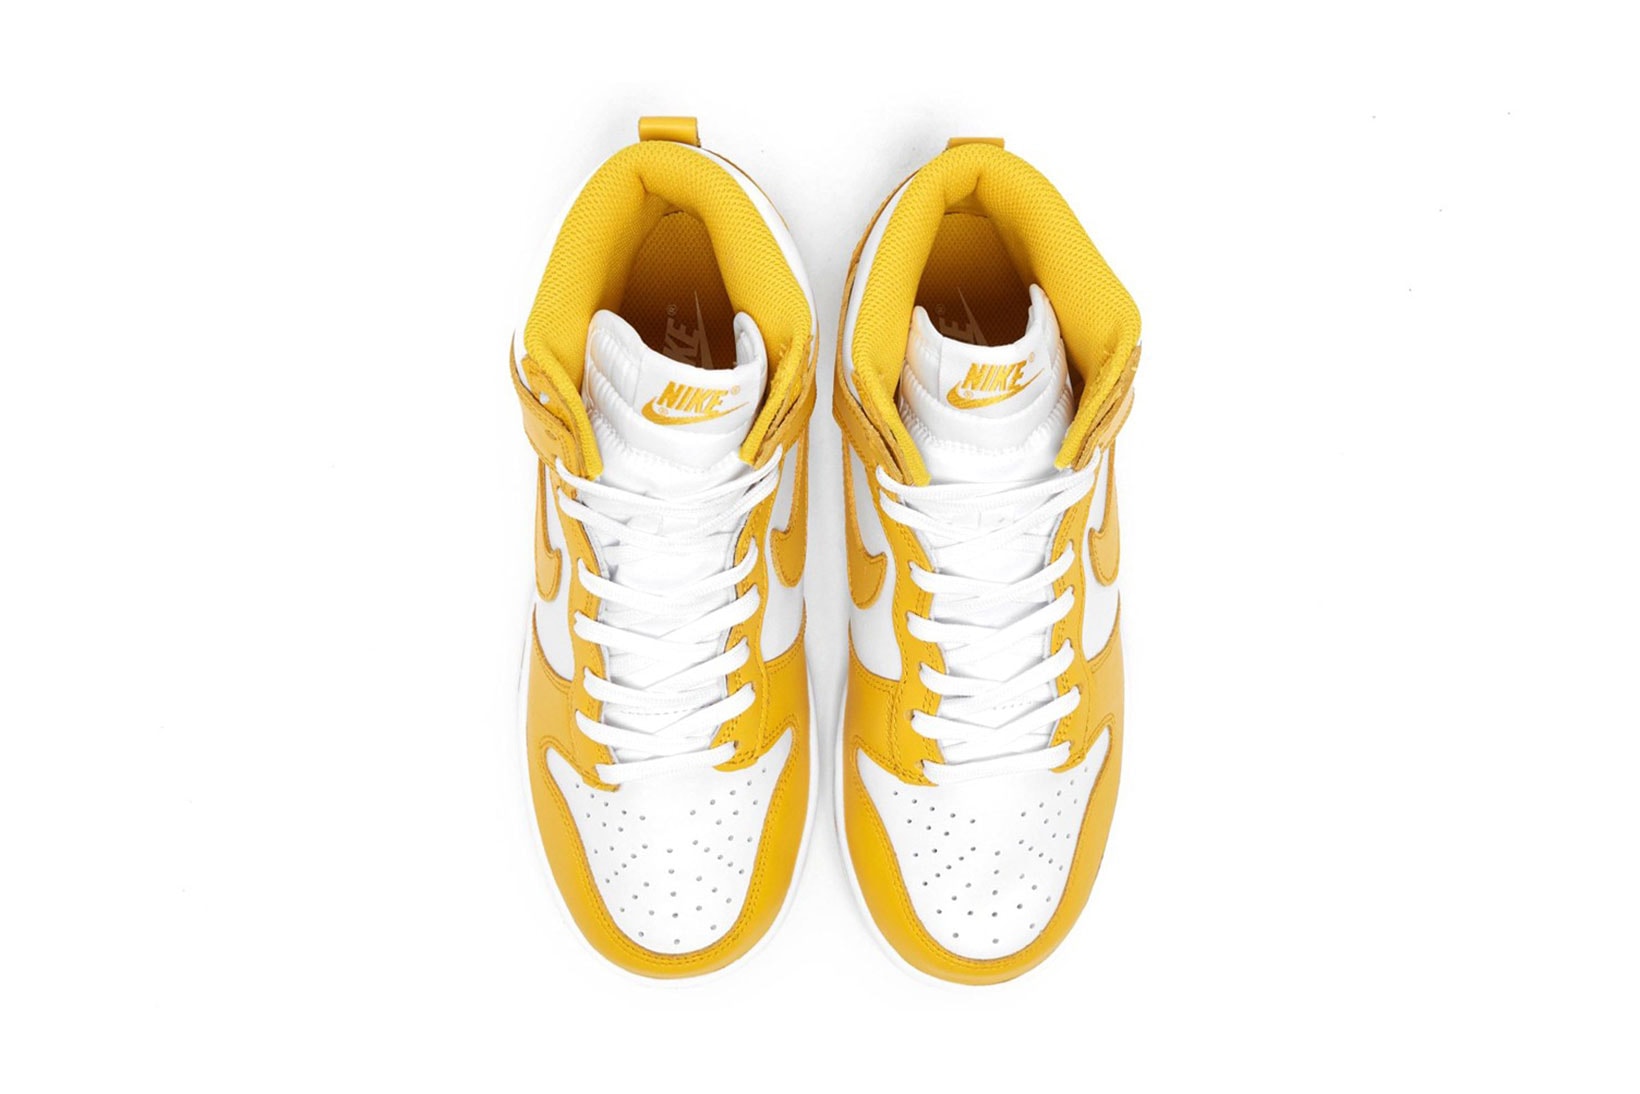 nike dunk high sneakers dark sulfur yellow white colorway kicks sneakerhead shoes footwear lateral top view